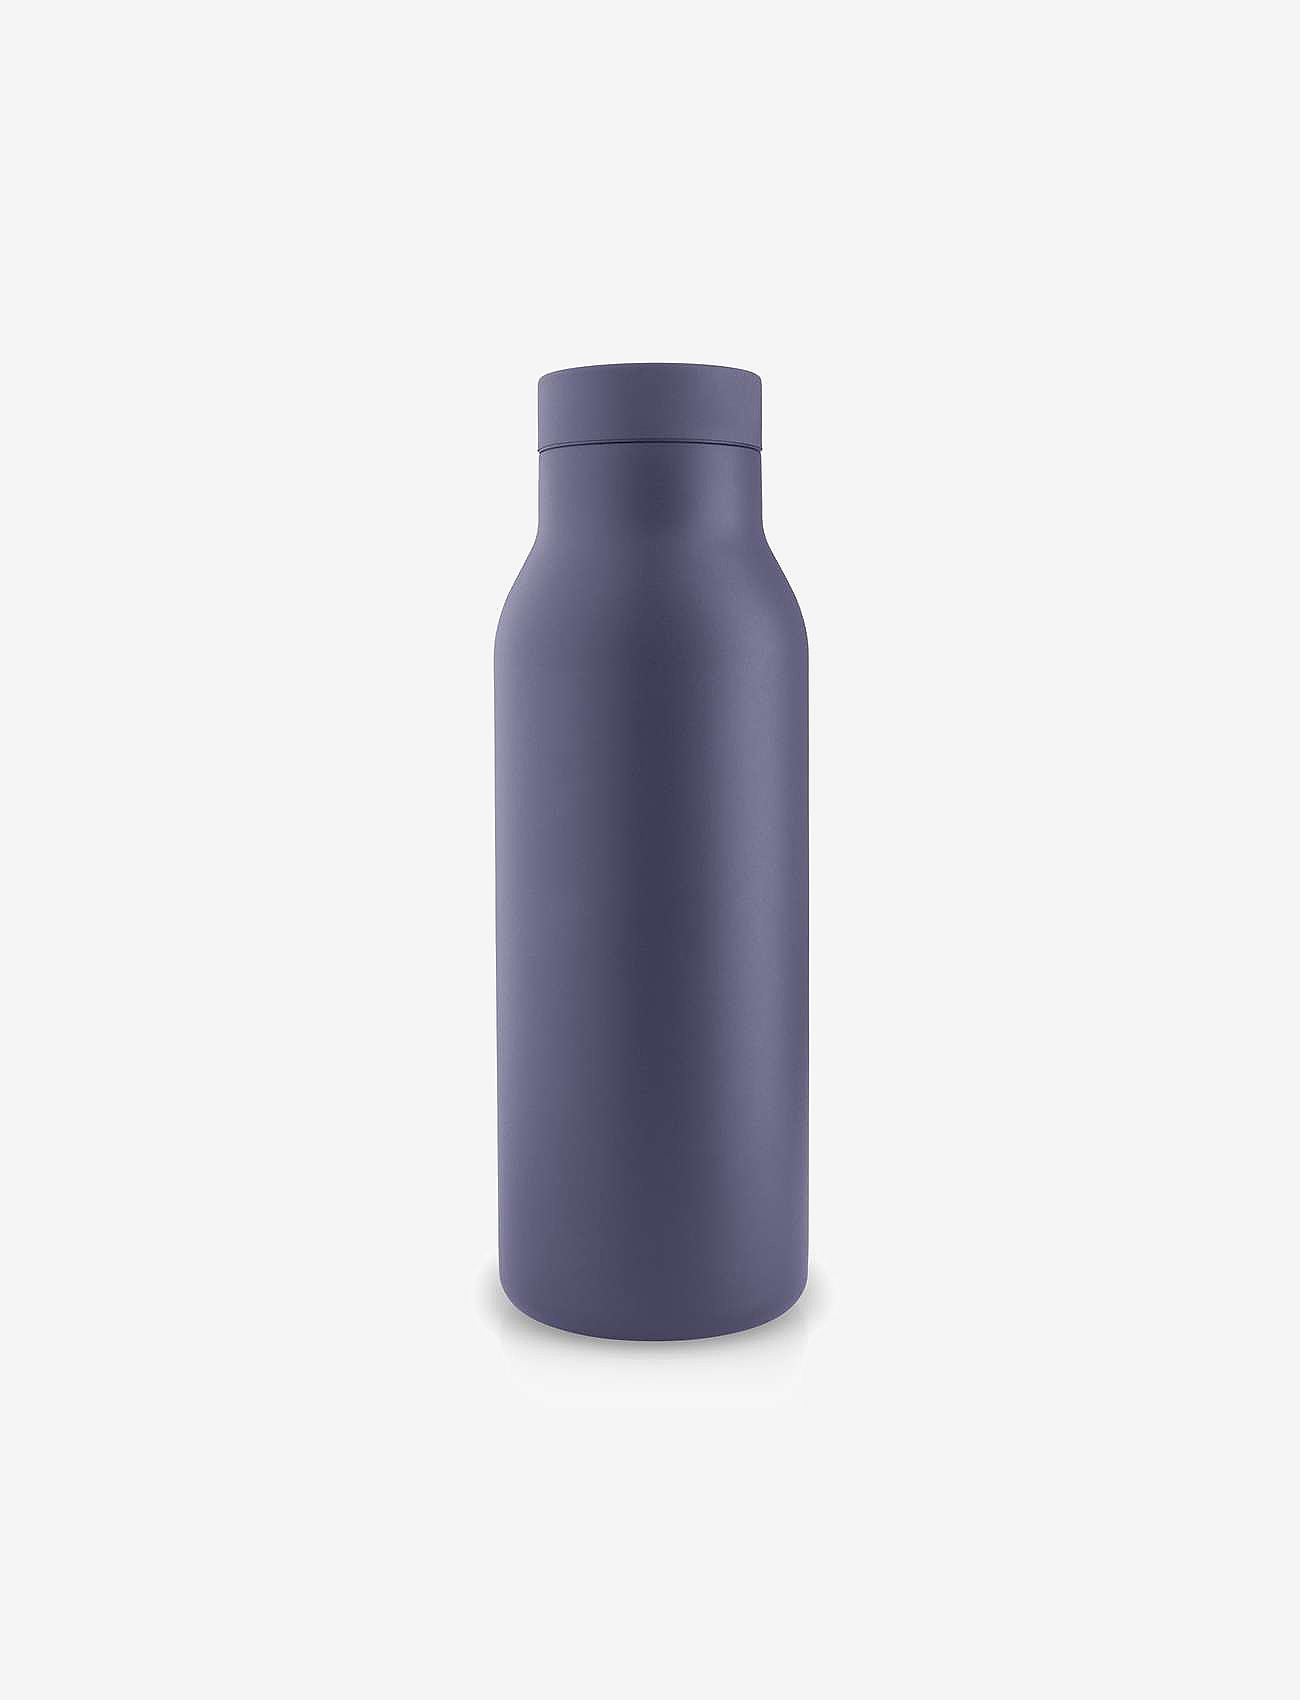 Eva Solo - Urban thermo flask 0.5l Violet blue - lowest prices - violet blue - 0